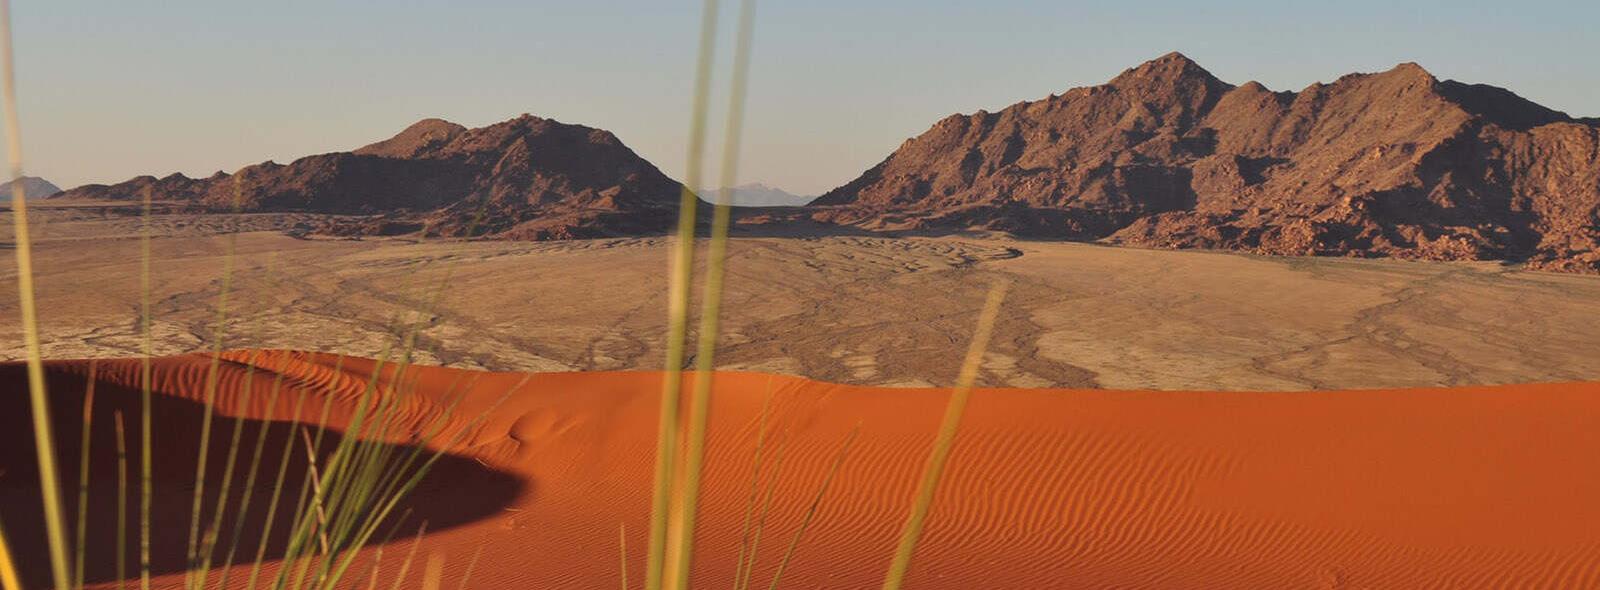 rode sesriem woestijn bij sossusvlei namibie